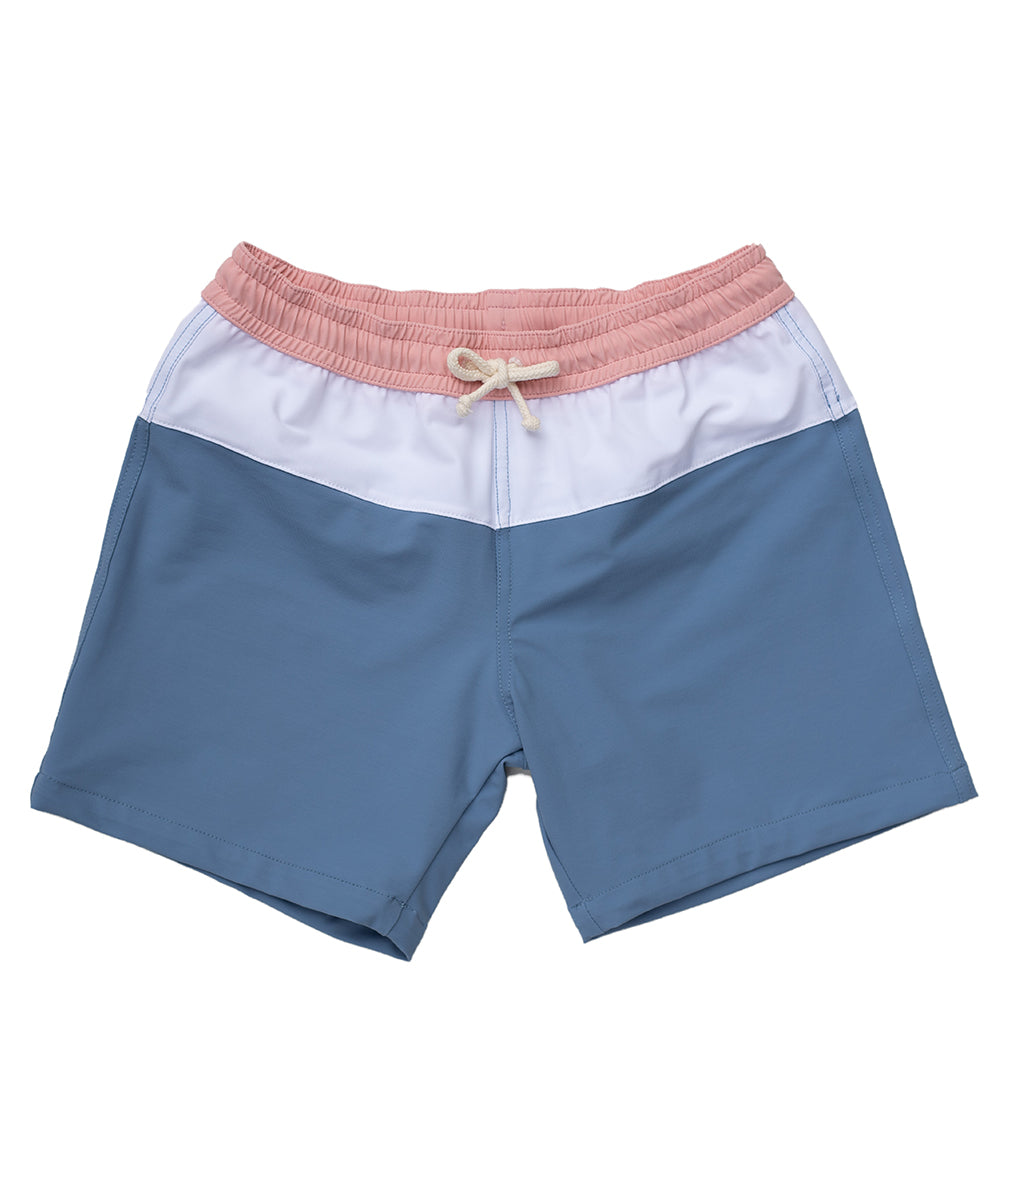 Men's Swim shorts Harry - Light Blue and Pink - Folpetto